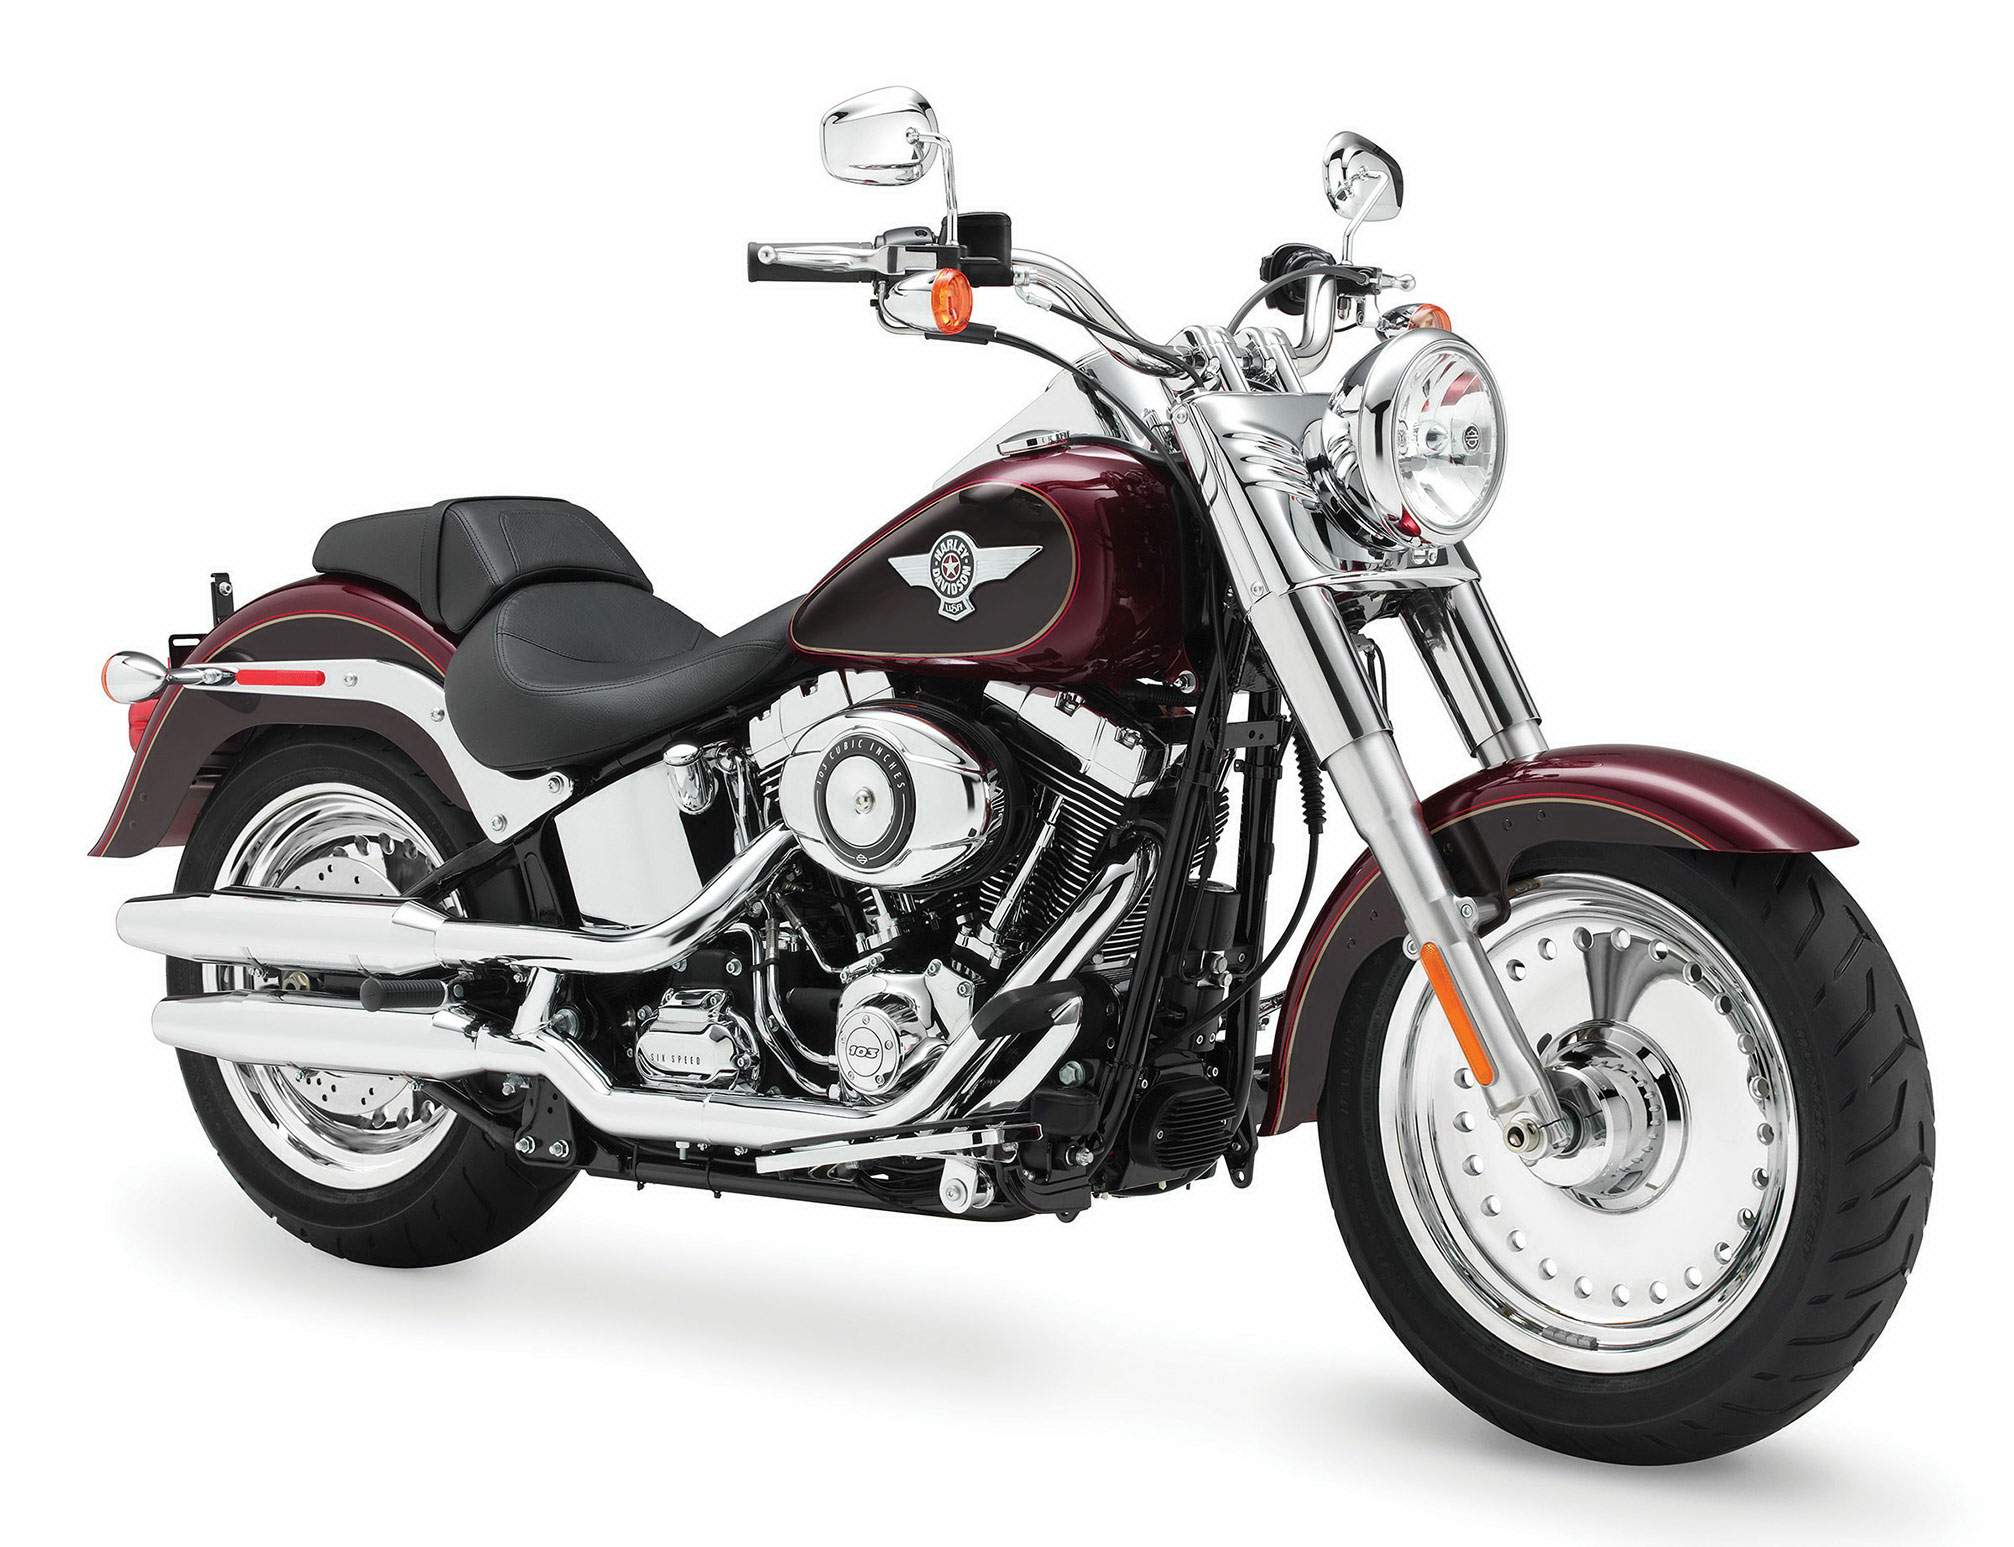 2021 Harley Davidson Fat Boy Bs6 Price Specs Mileage Top Speed